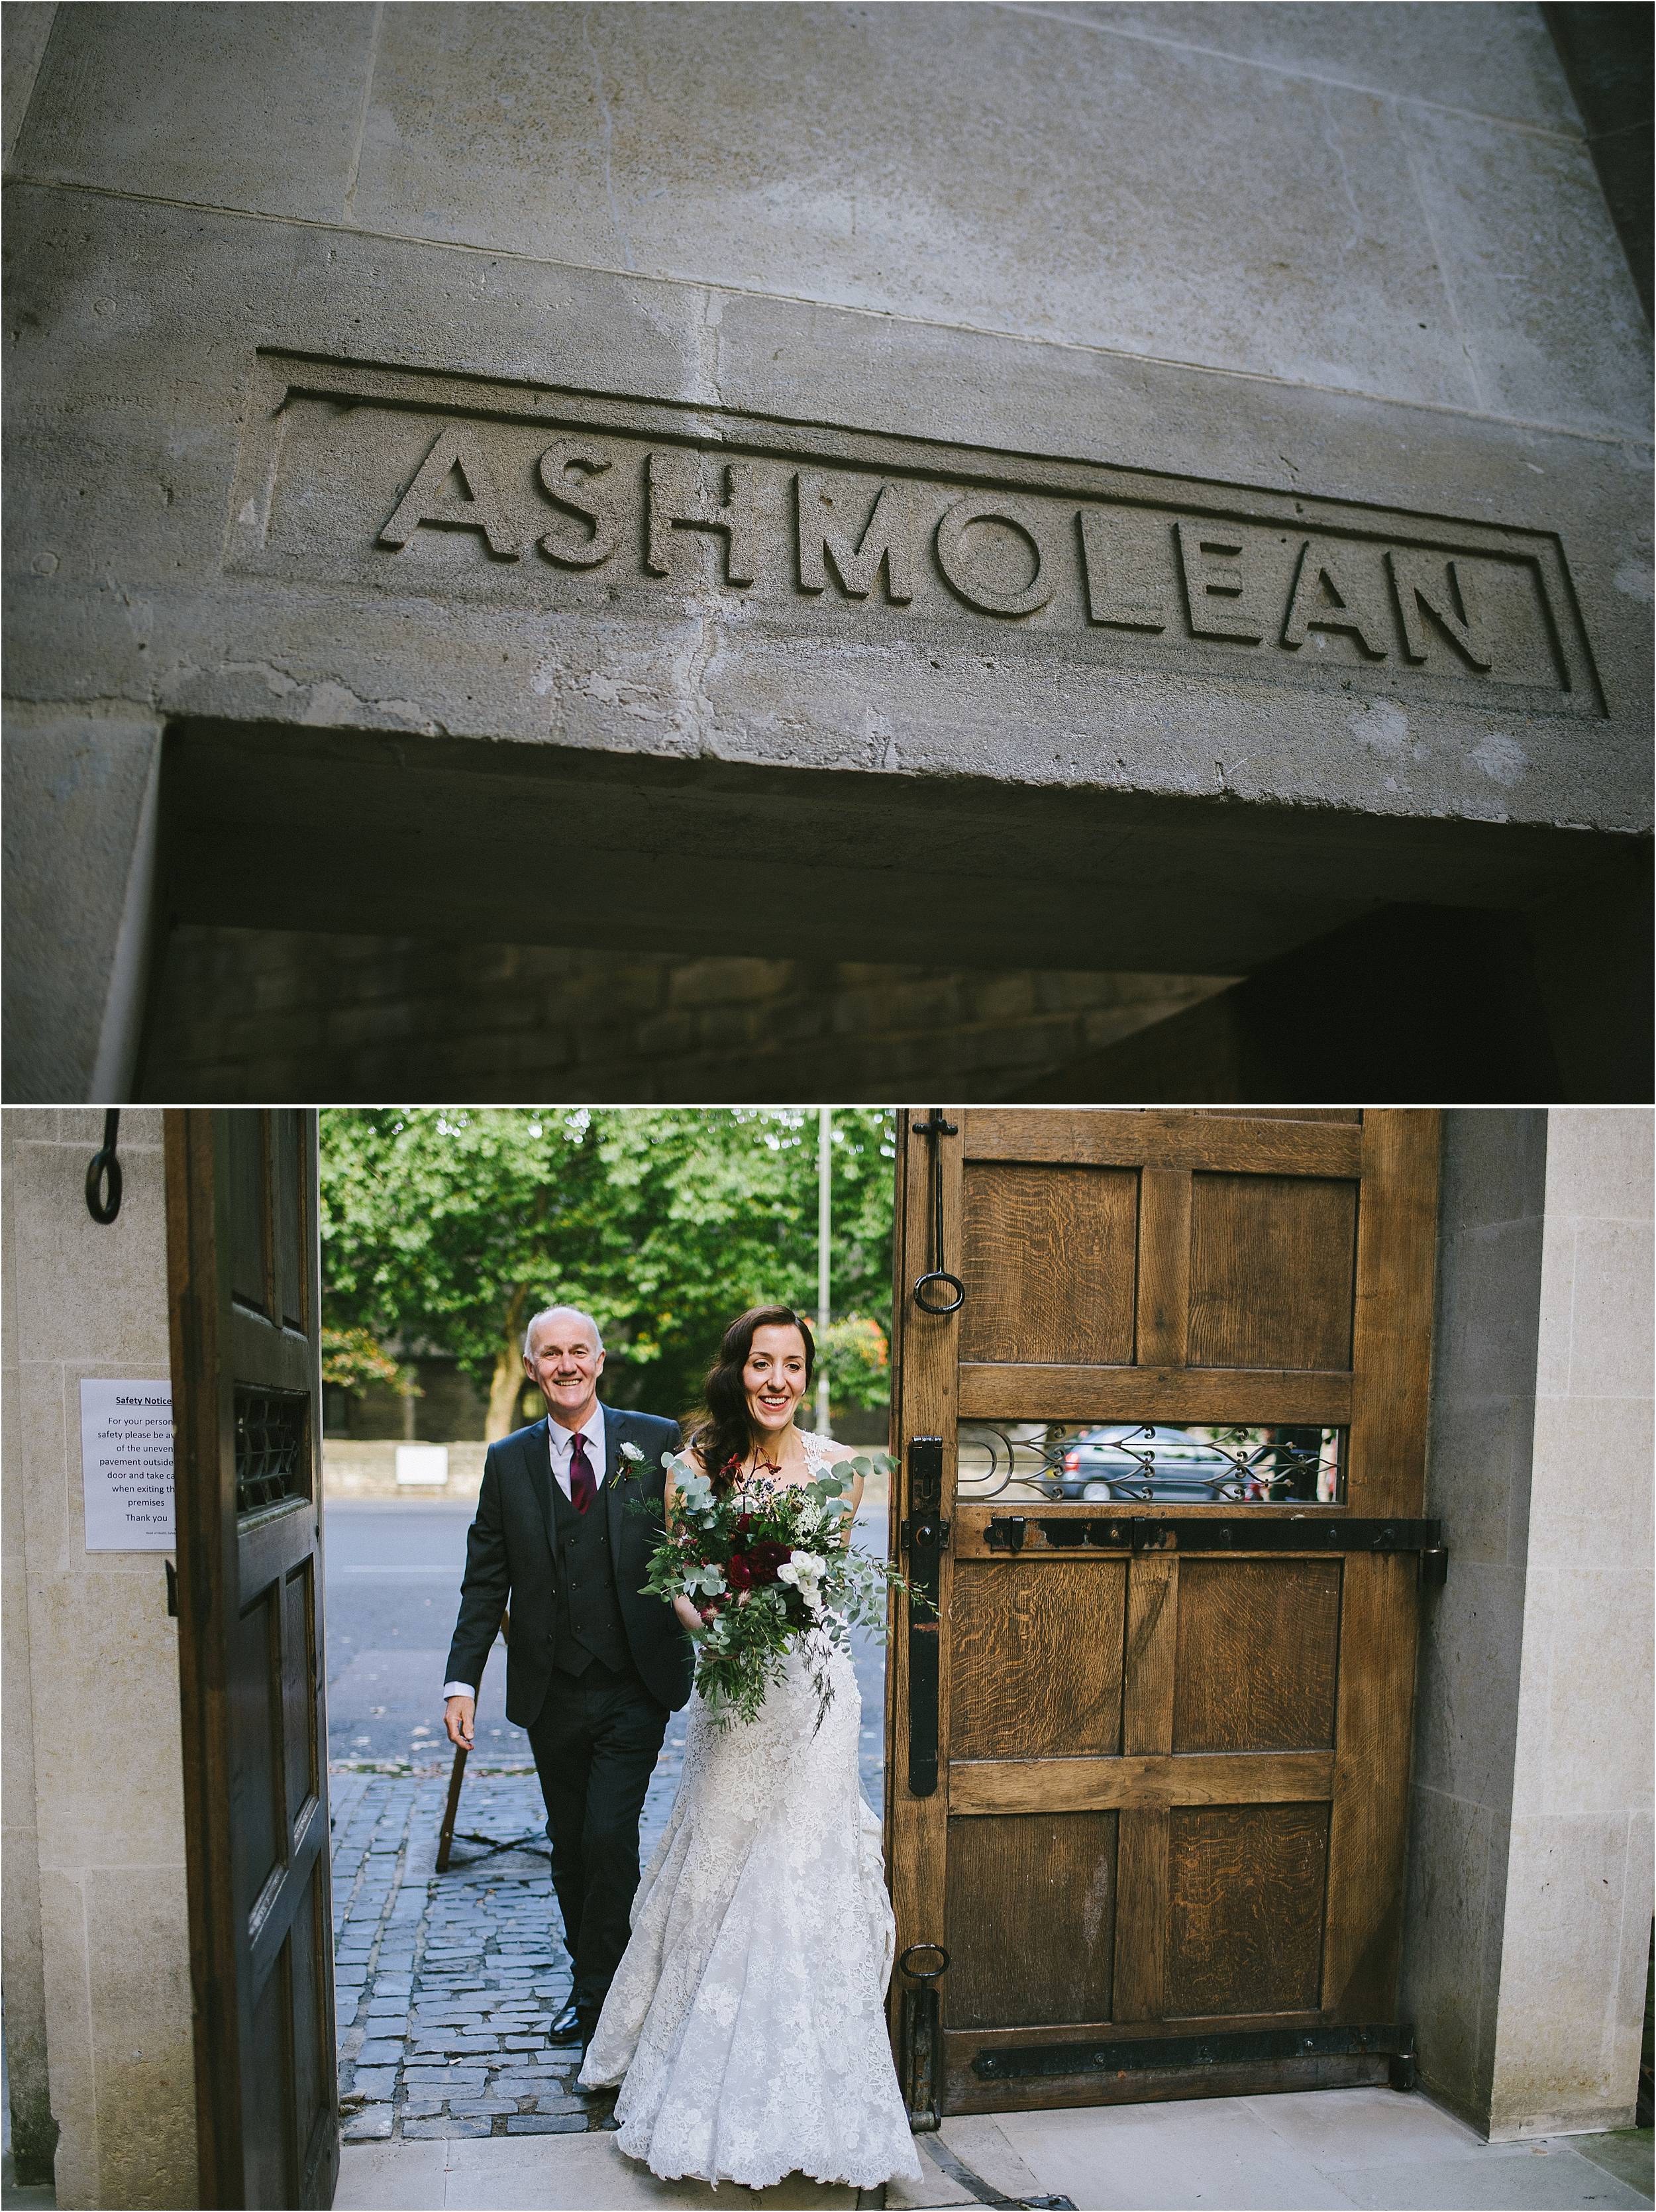 Oxford Ashmolean Museum Wedding Photography_0066.jpg